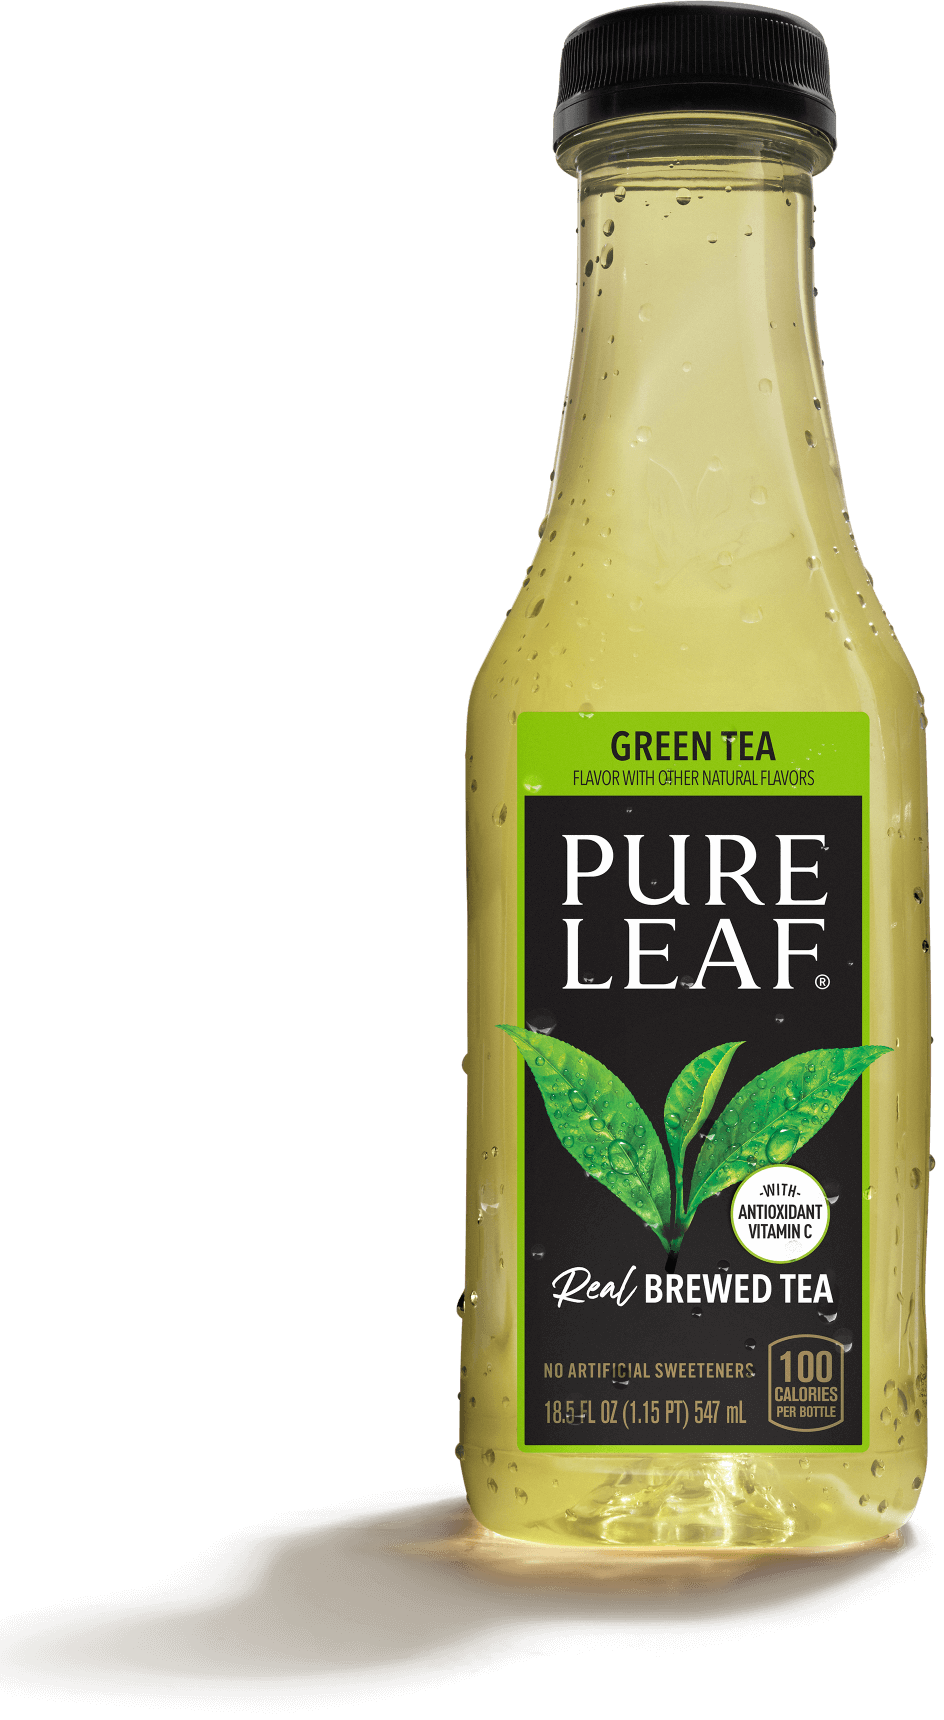 Pure Leaf launches Herbal Iced Tea varieties